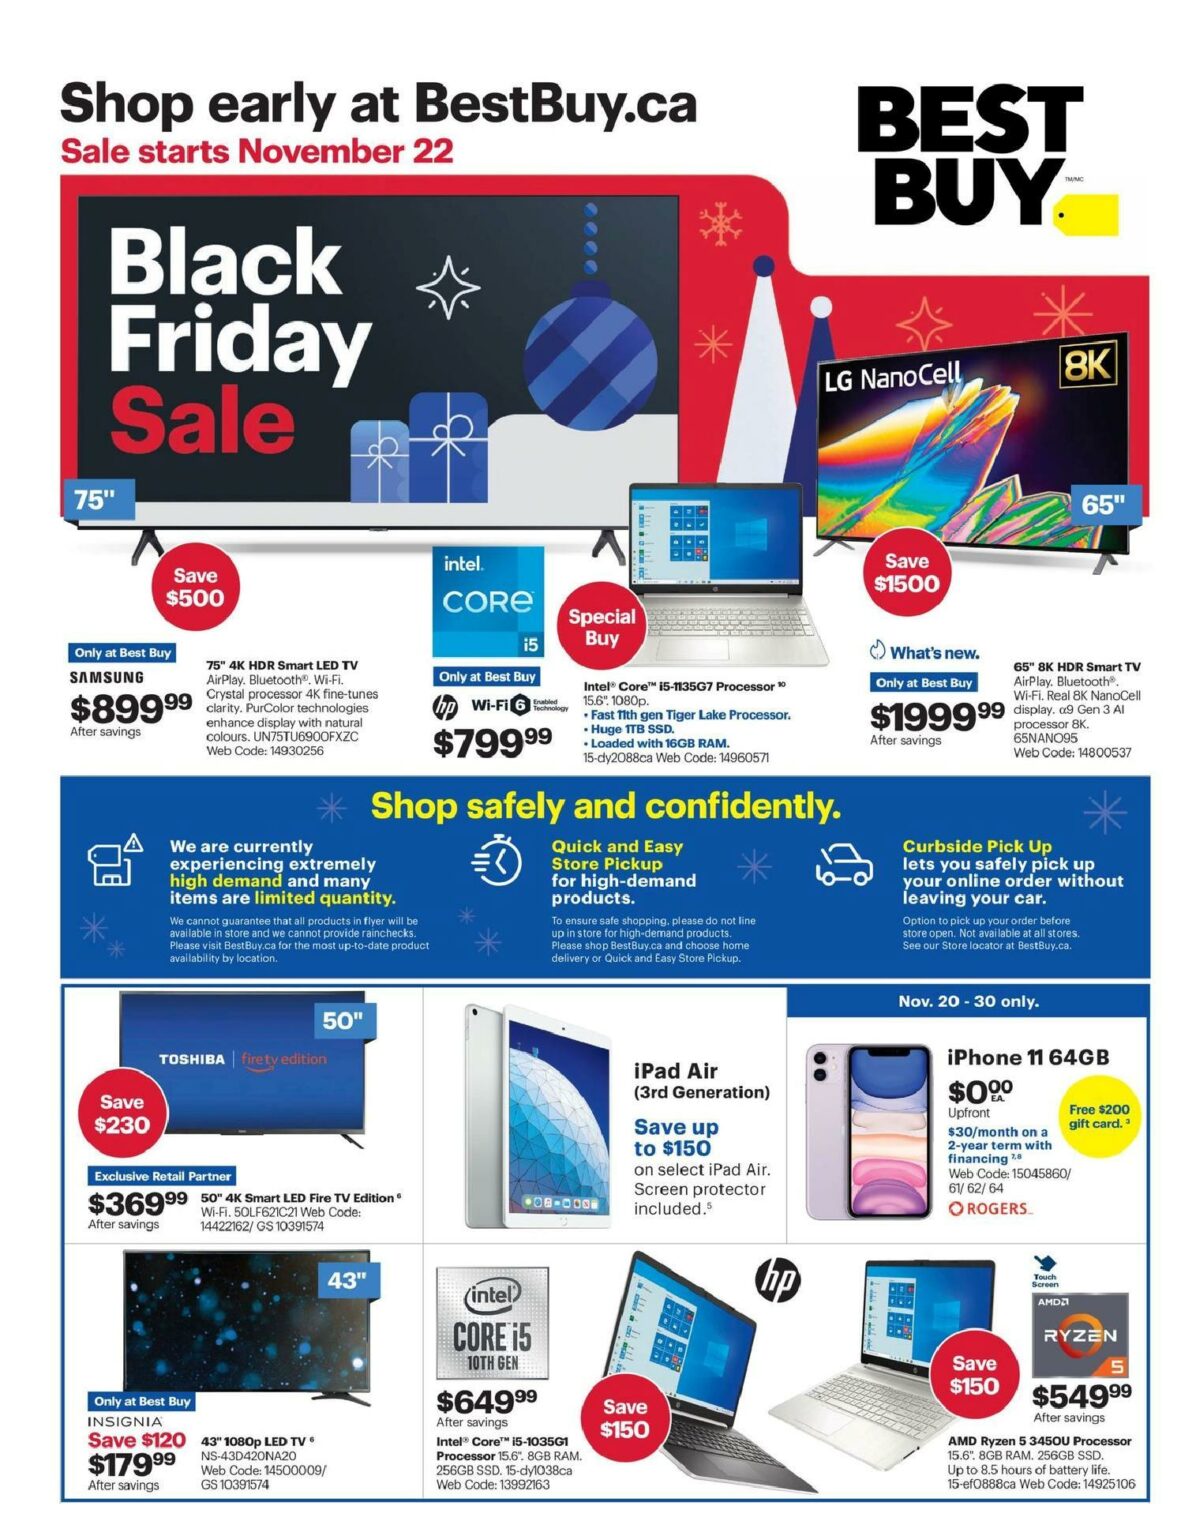 Best Buy Black Friday Flyer Deals 2020 Canada - What Stores Have Online Black Friday Deals